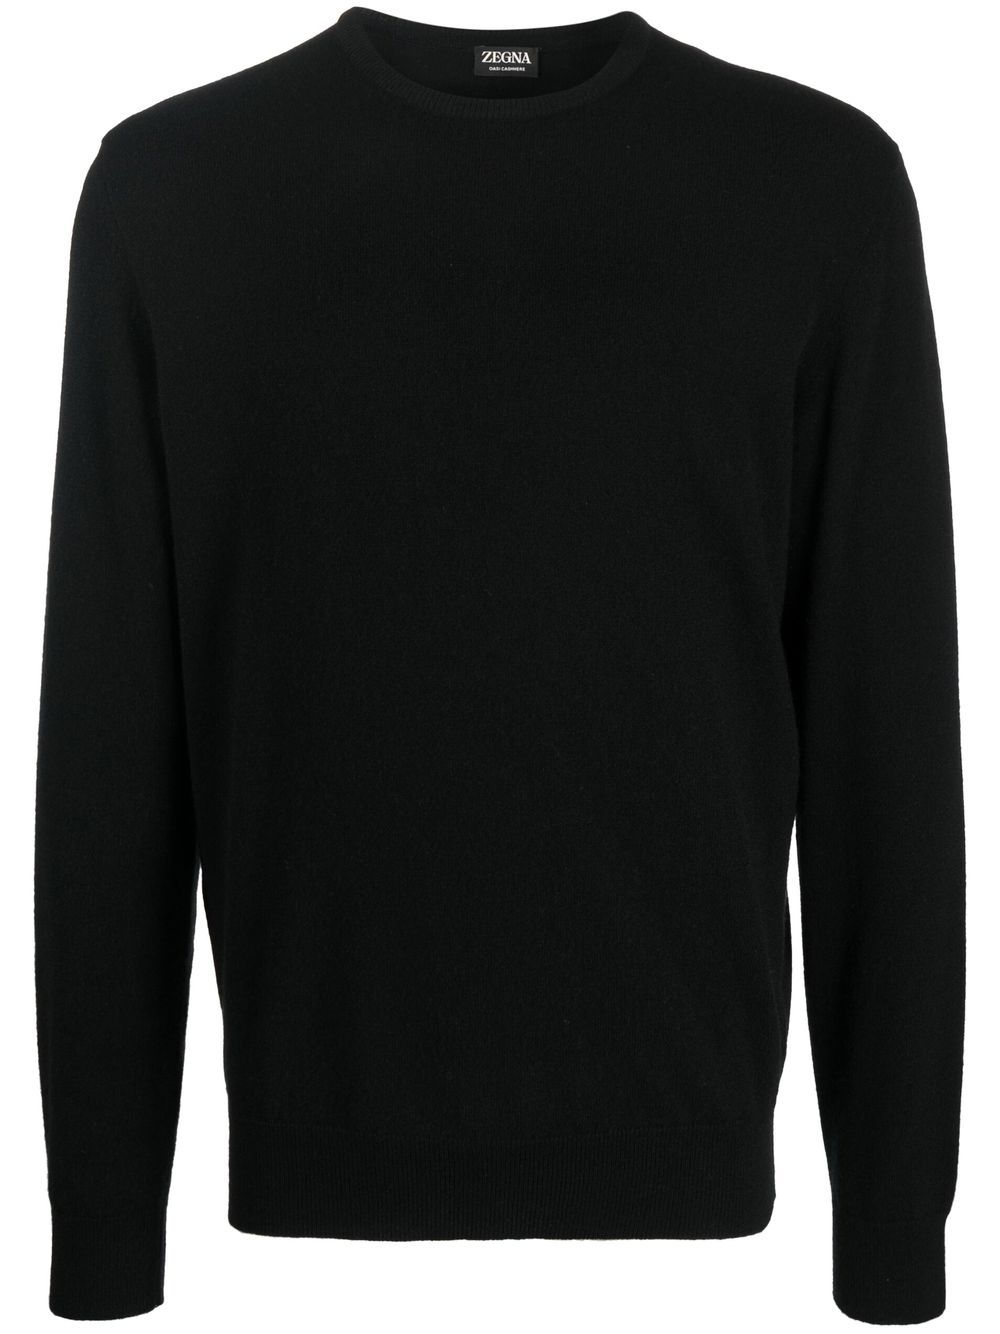 Image 1 of Zegna crew neck cashmere sweater